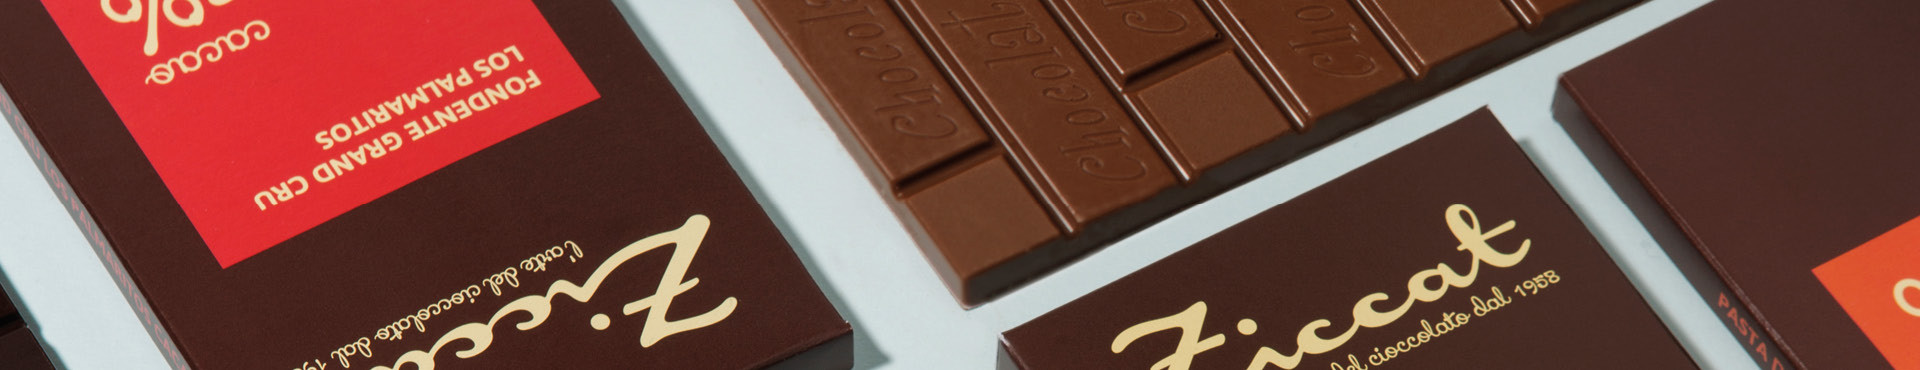 Standard Bars of Chocolate